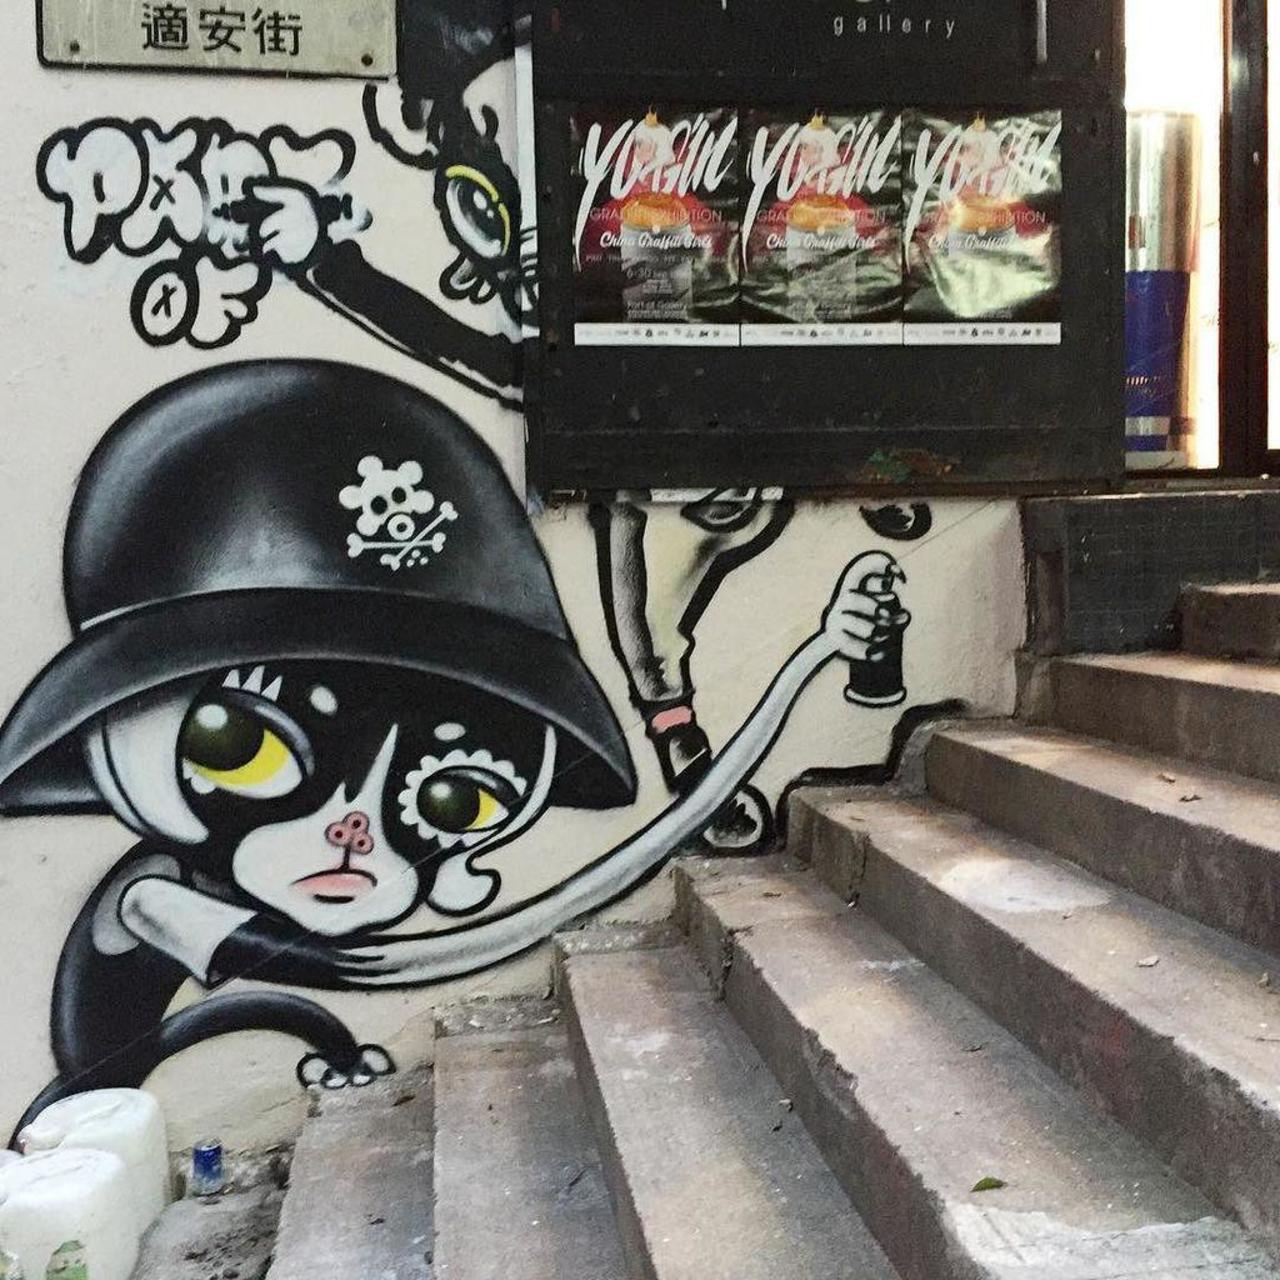 via #barbieszeman "http://ift.tt/1QKKdgW" #graffiti #streetart http://t.co/o5V4iQrTyt